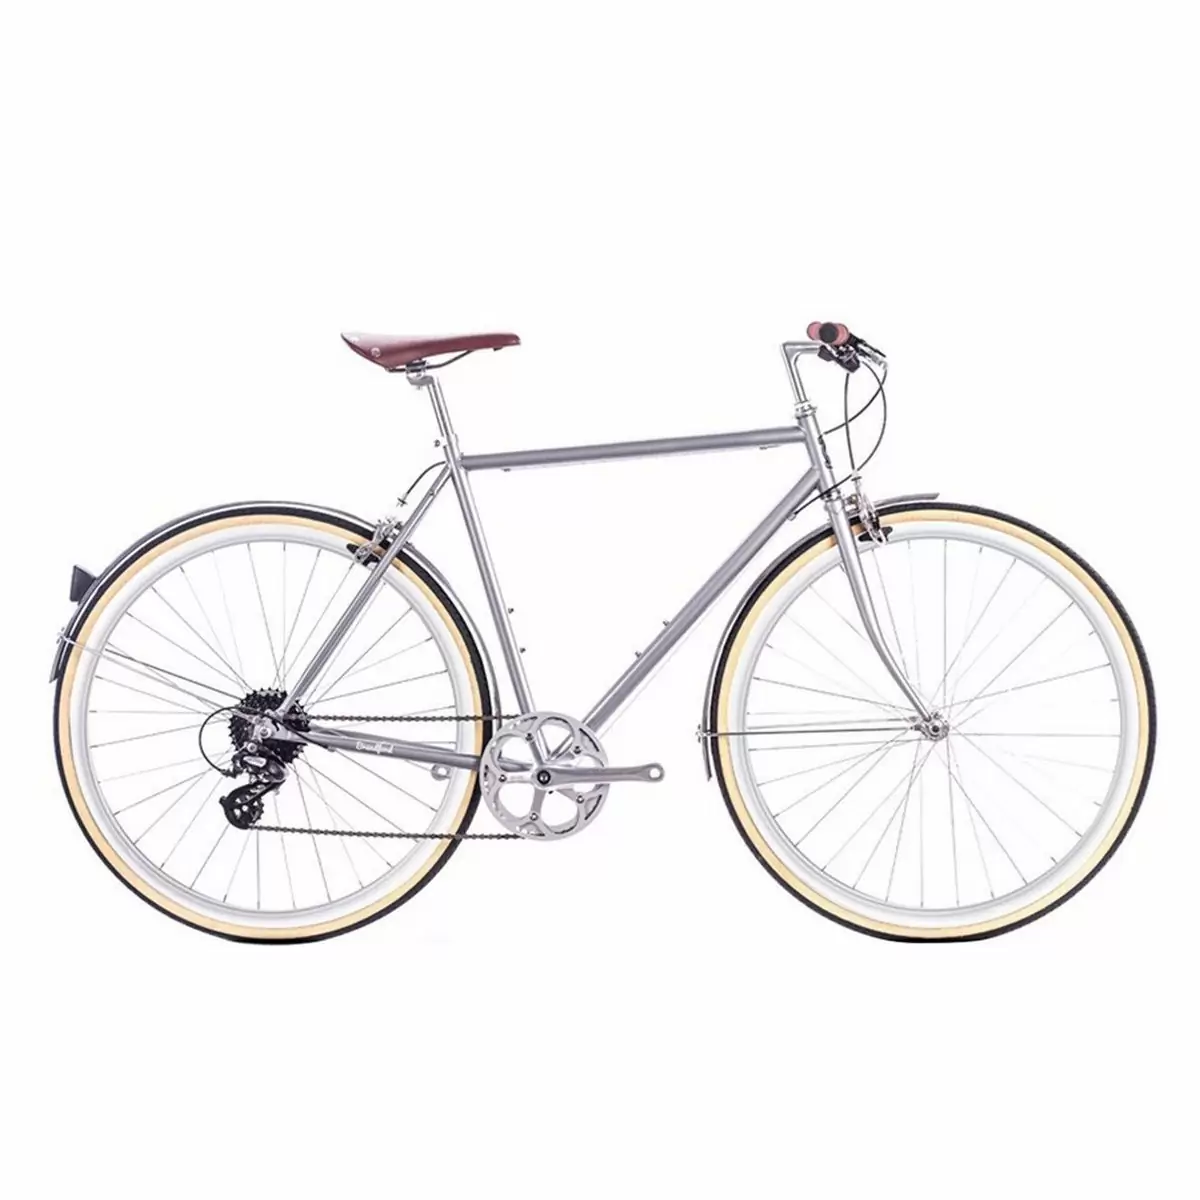 City bike ODYSSEY 8spd Brandford silver medium 54cm - image